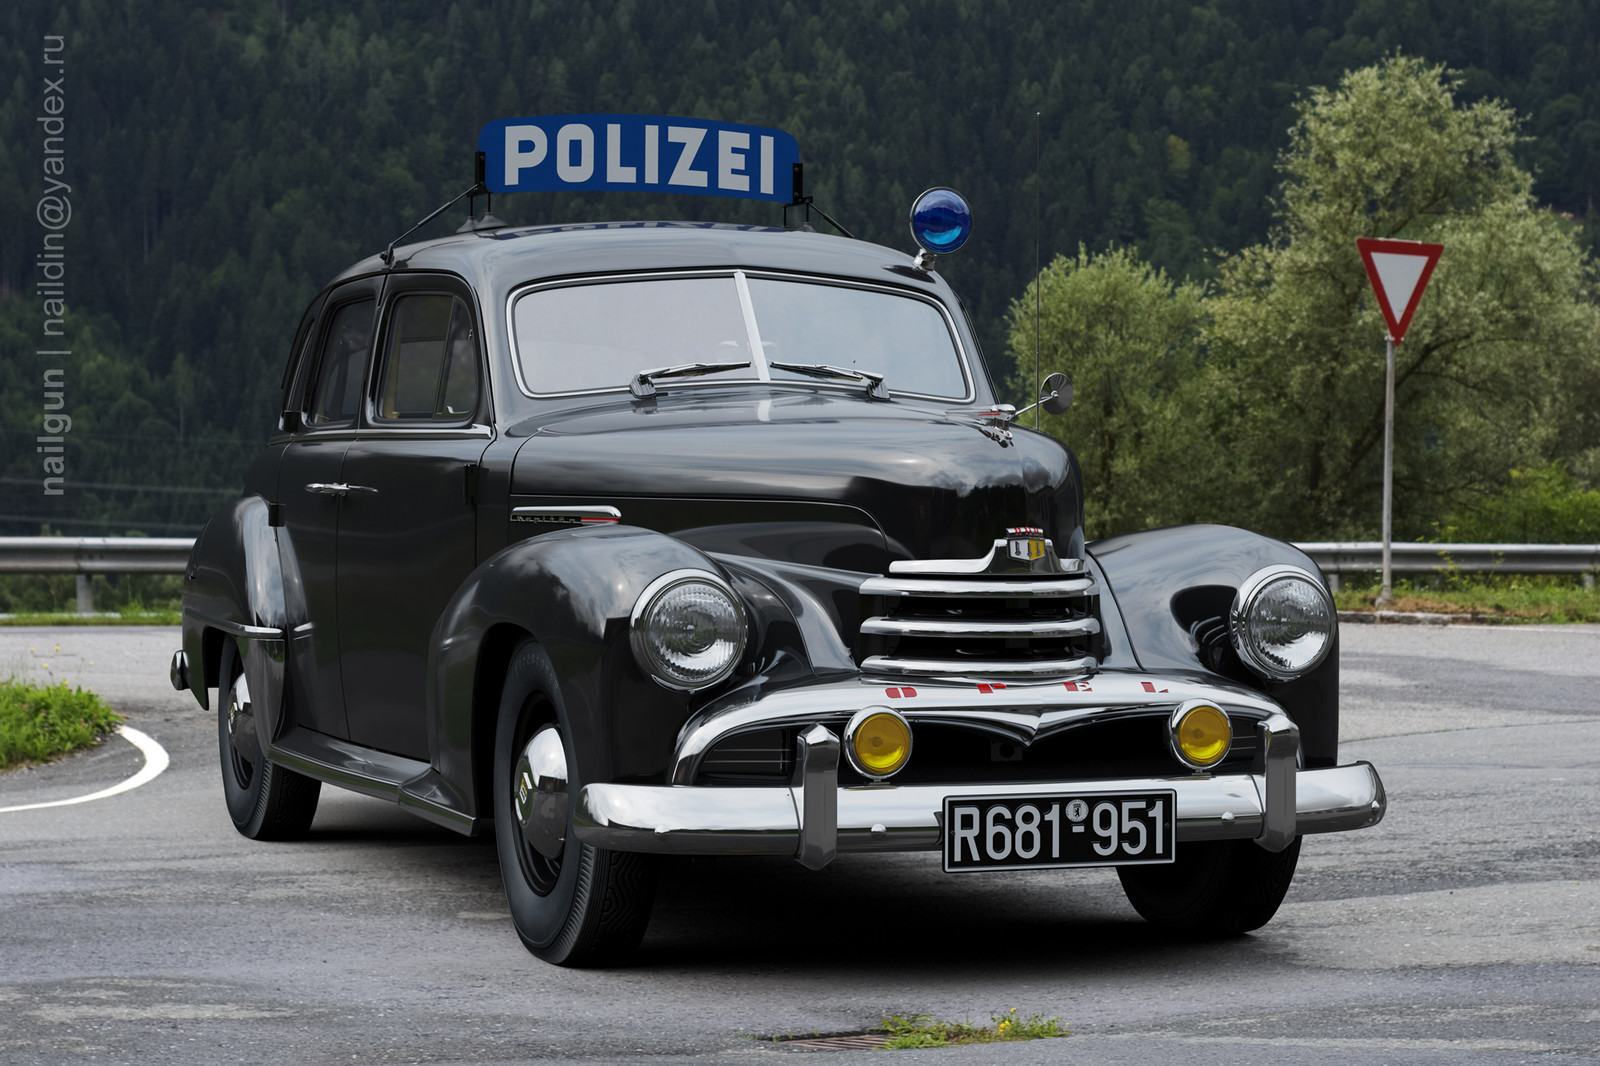 Police West Germany